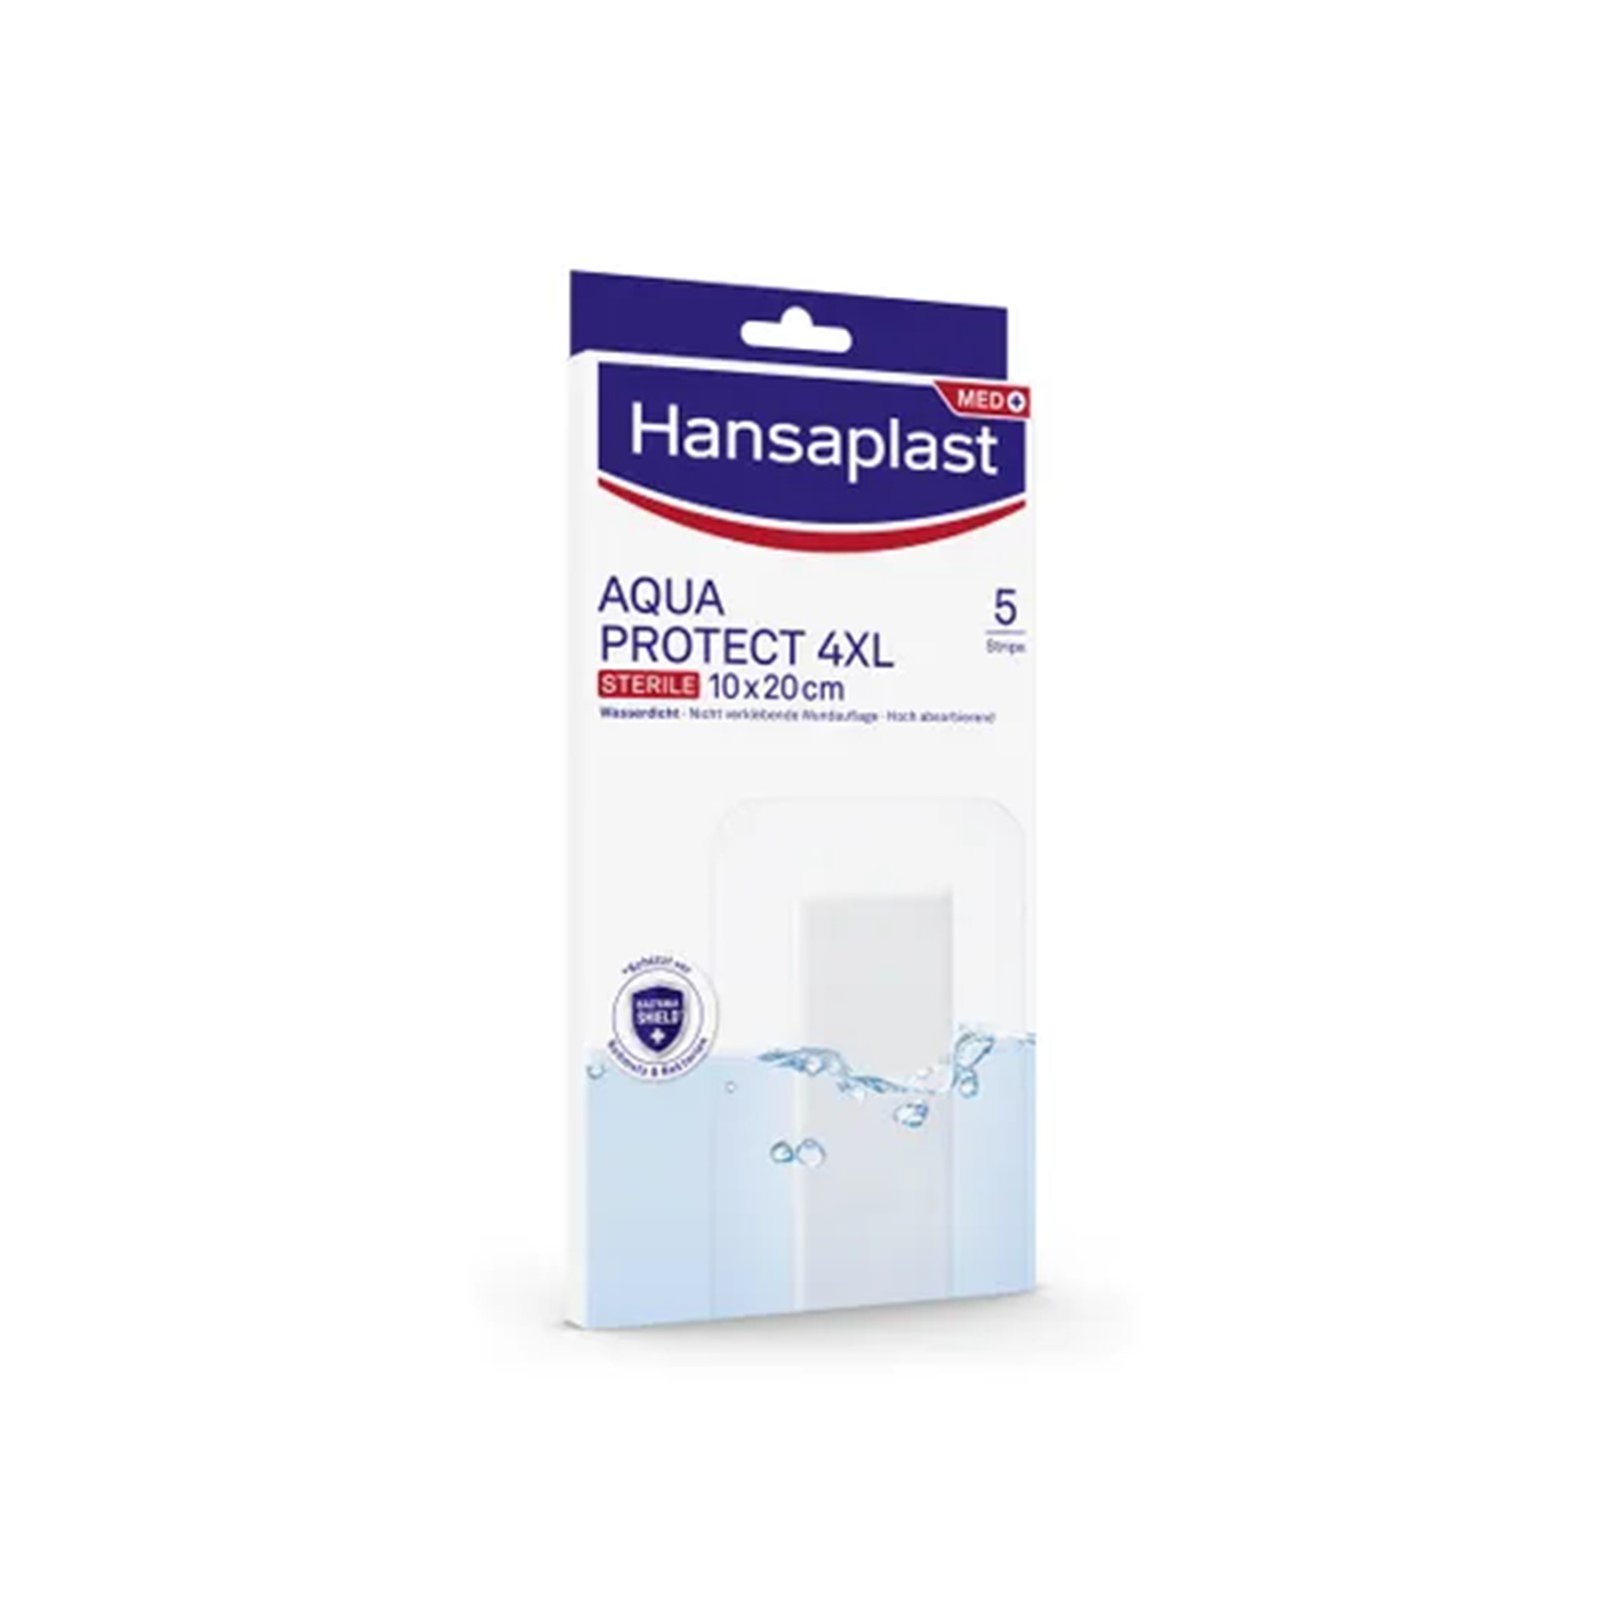 Hansaplast Med+ Aqua Protect 4XL Sterile Plasters x5